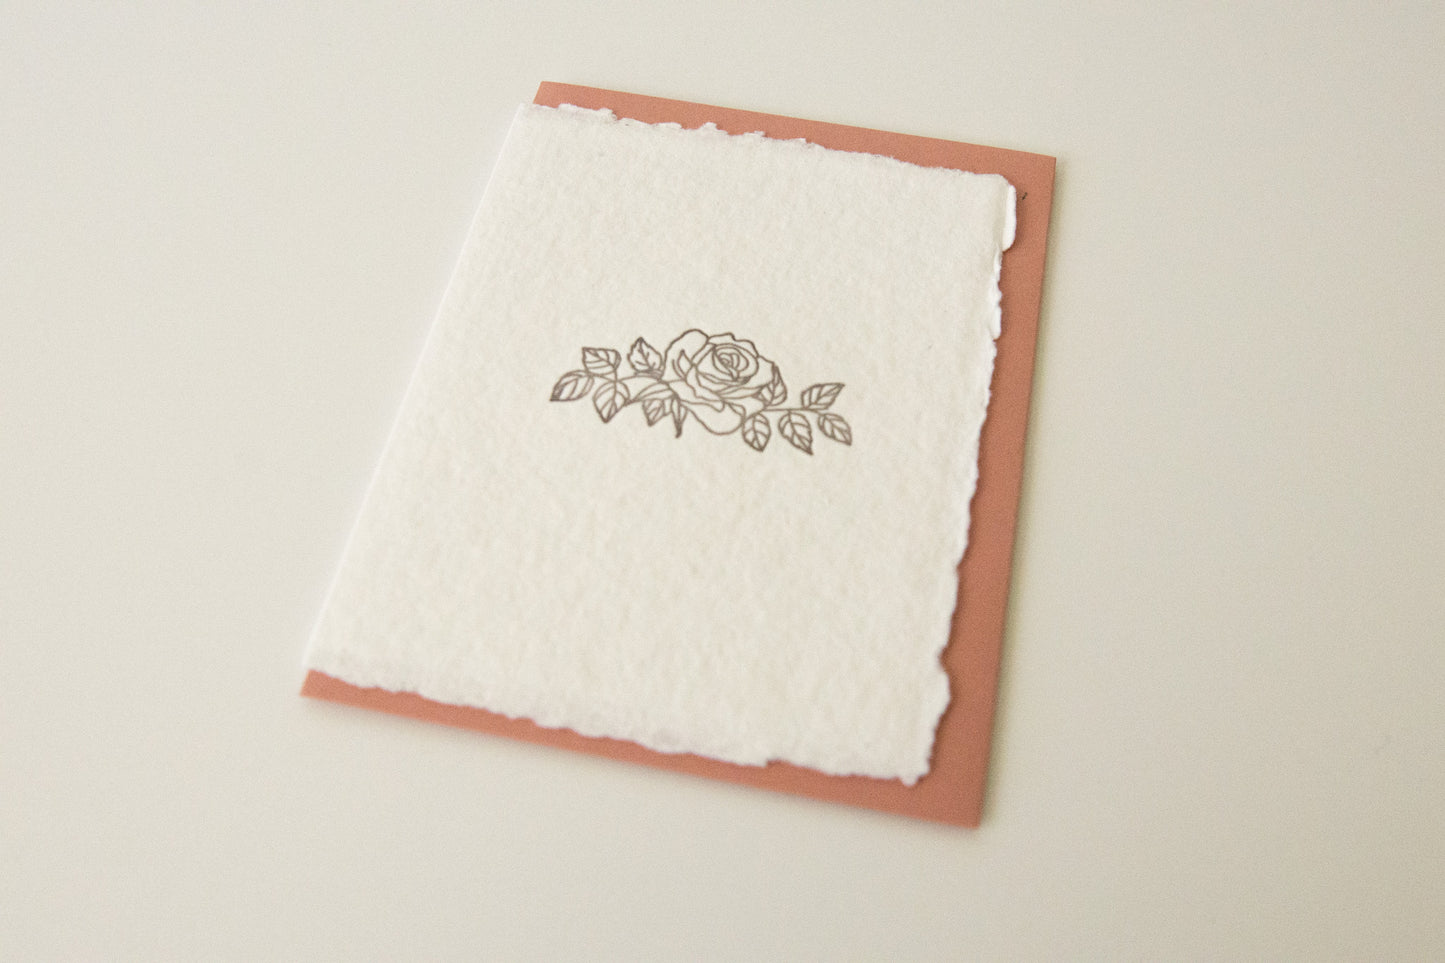 Rose Letterpress Greeting Card